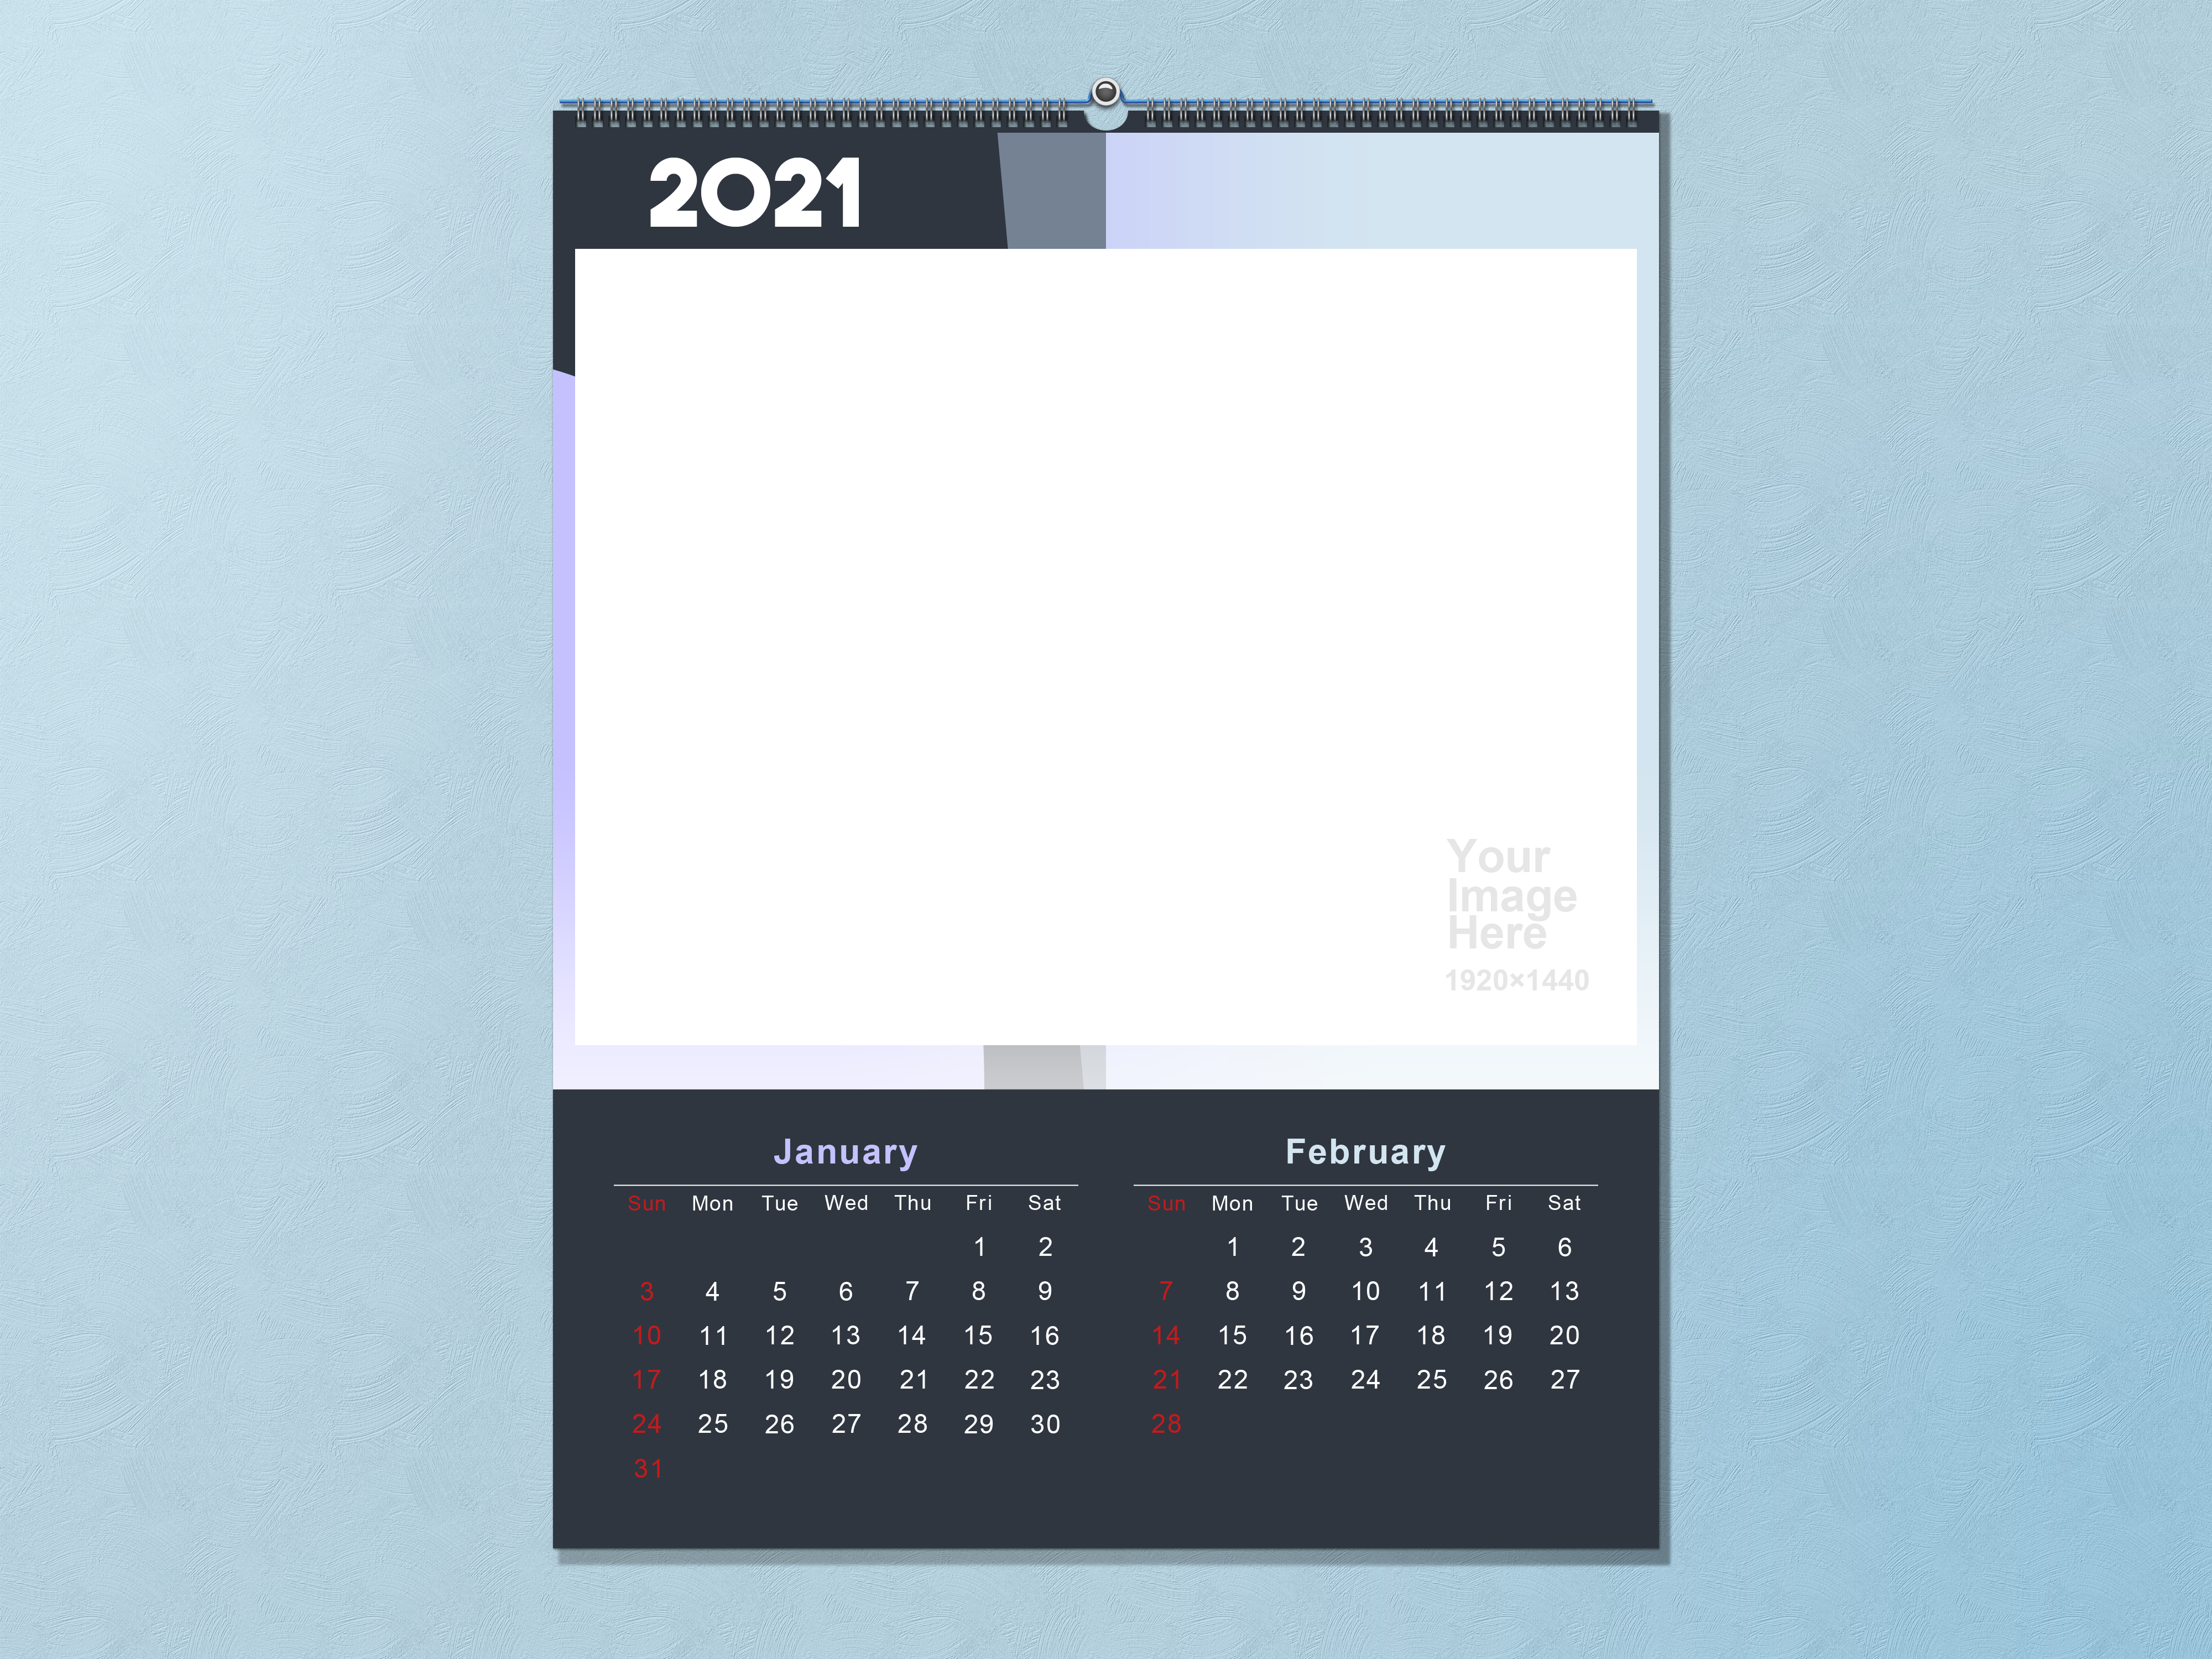 General 4000x3000 January February calendar 2021 (year) numbers cyan background